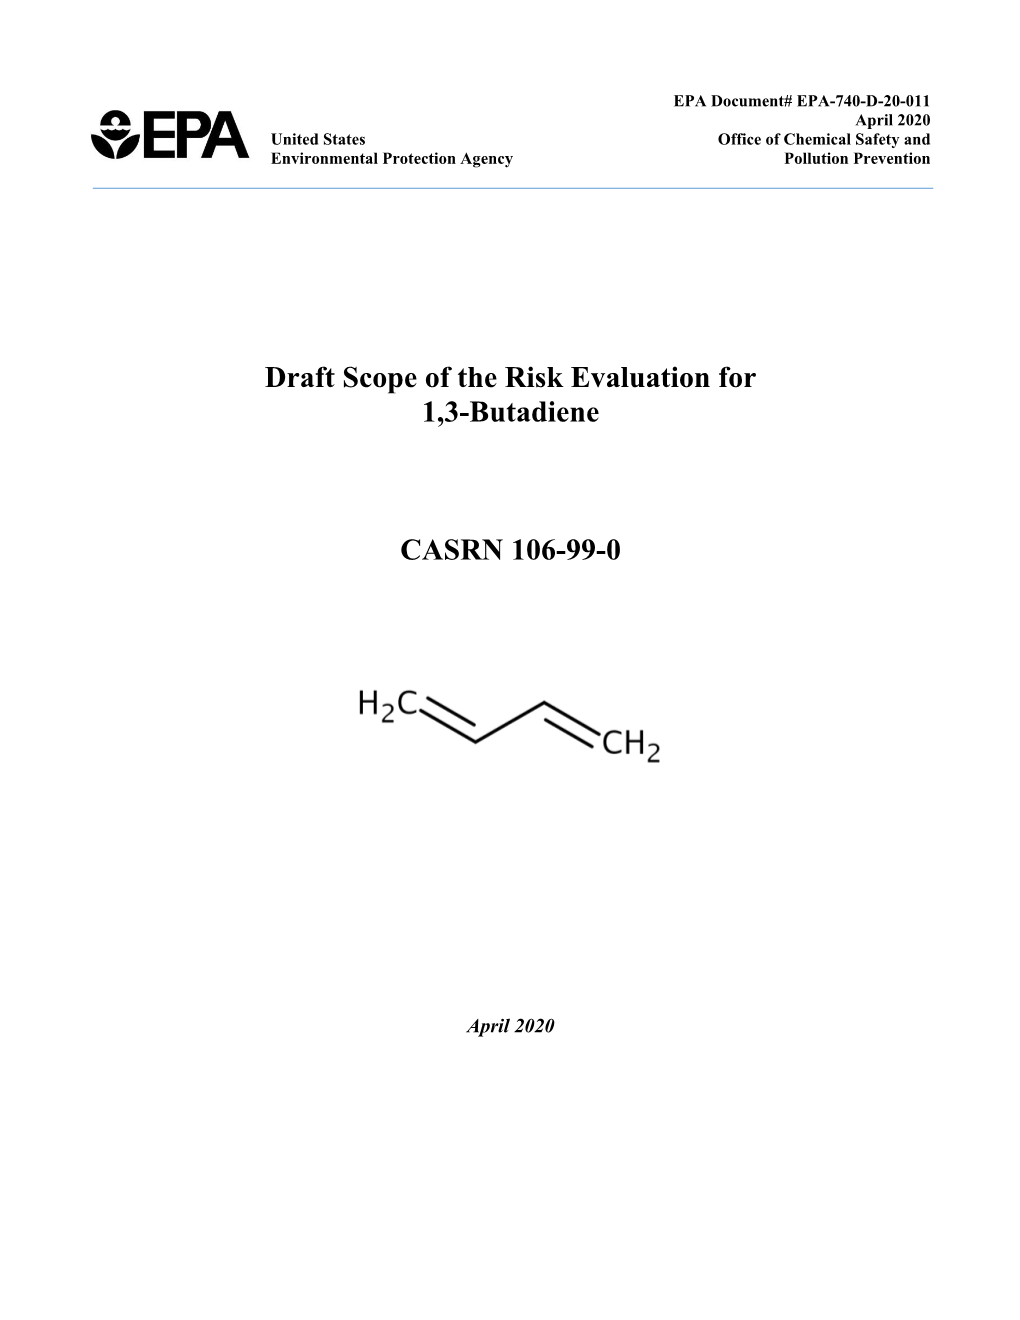 Draft Scope of the Risk Evaluation for 1,3-Butadiene CASRN 106-99-0